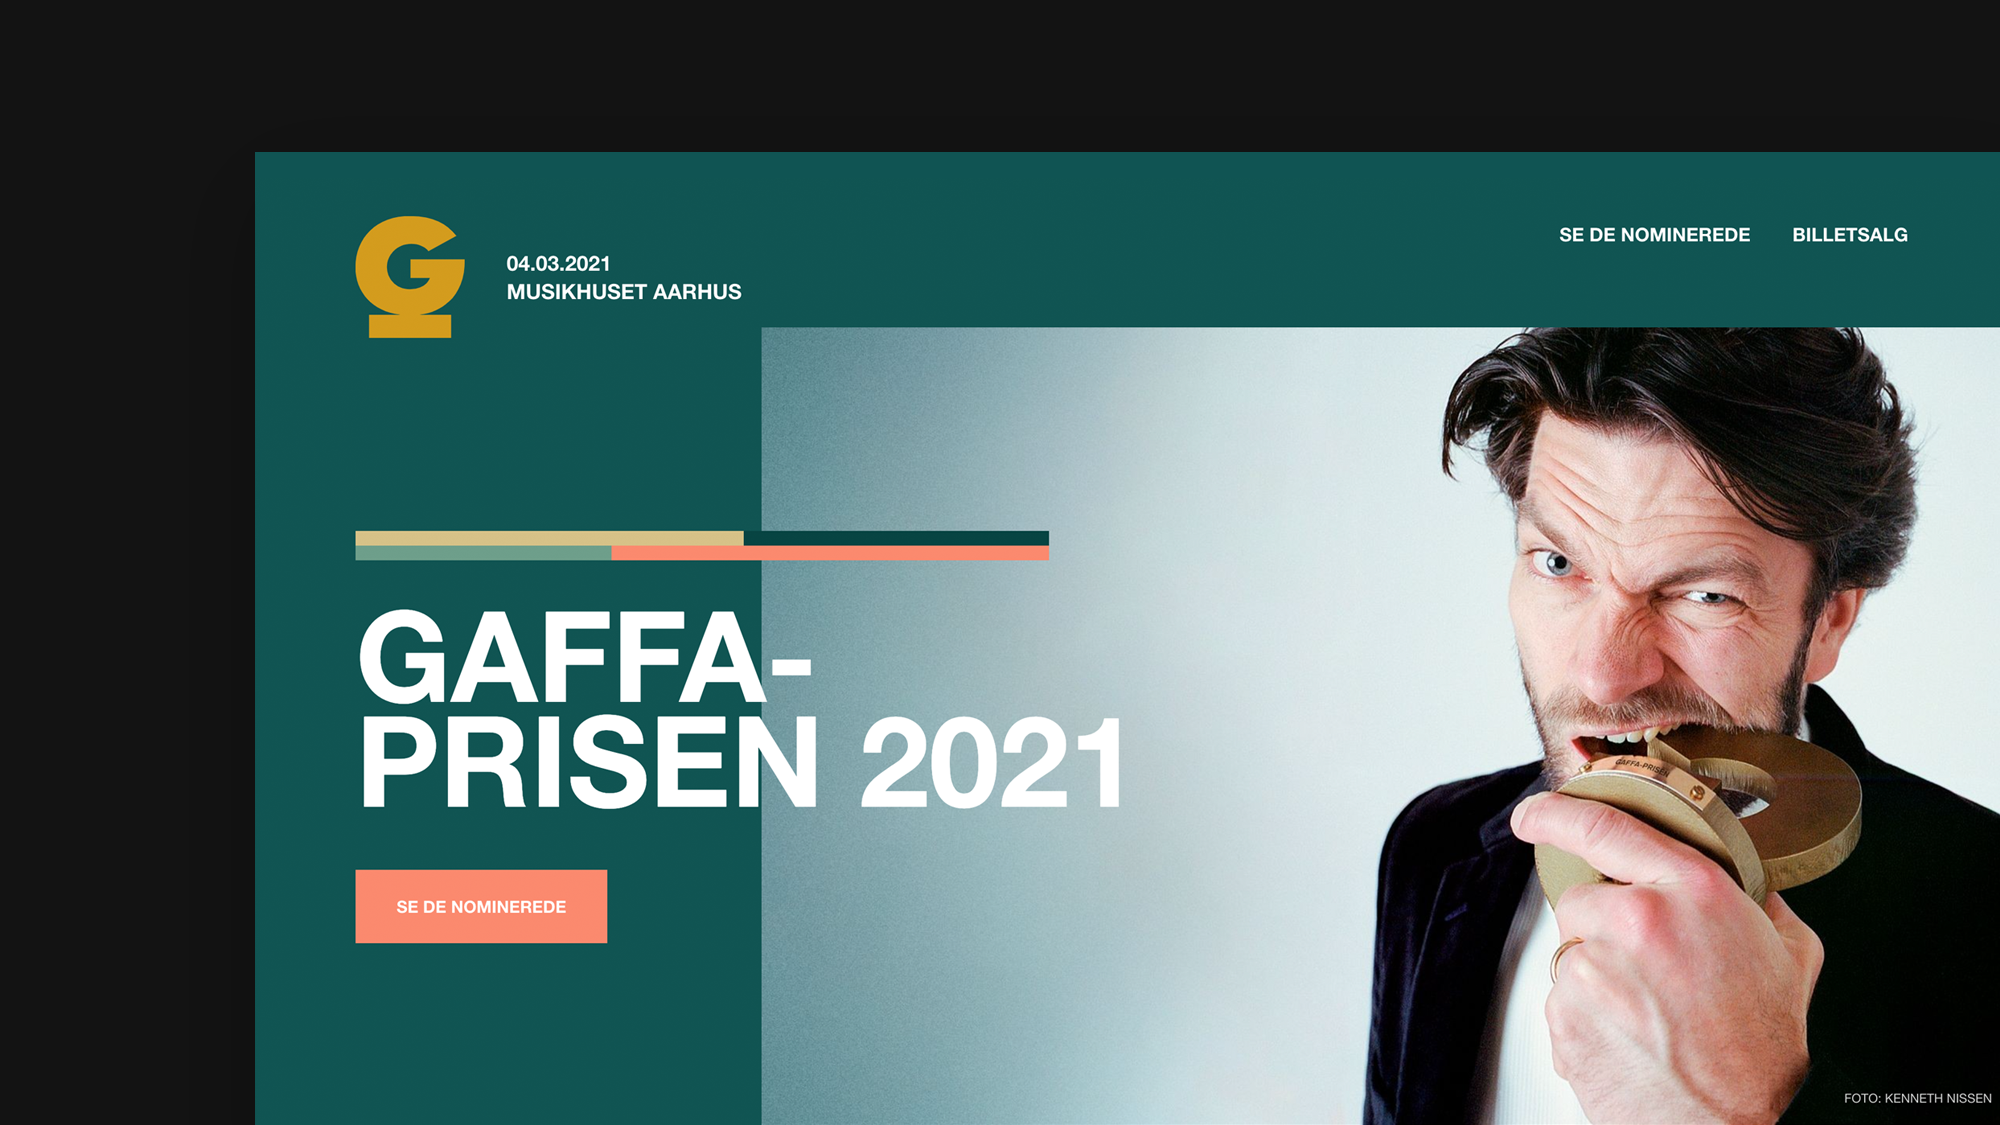 GAFFA-PRISEN - voting page - desktop version